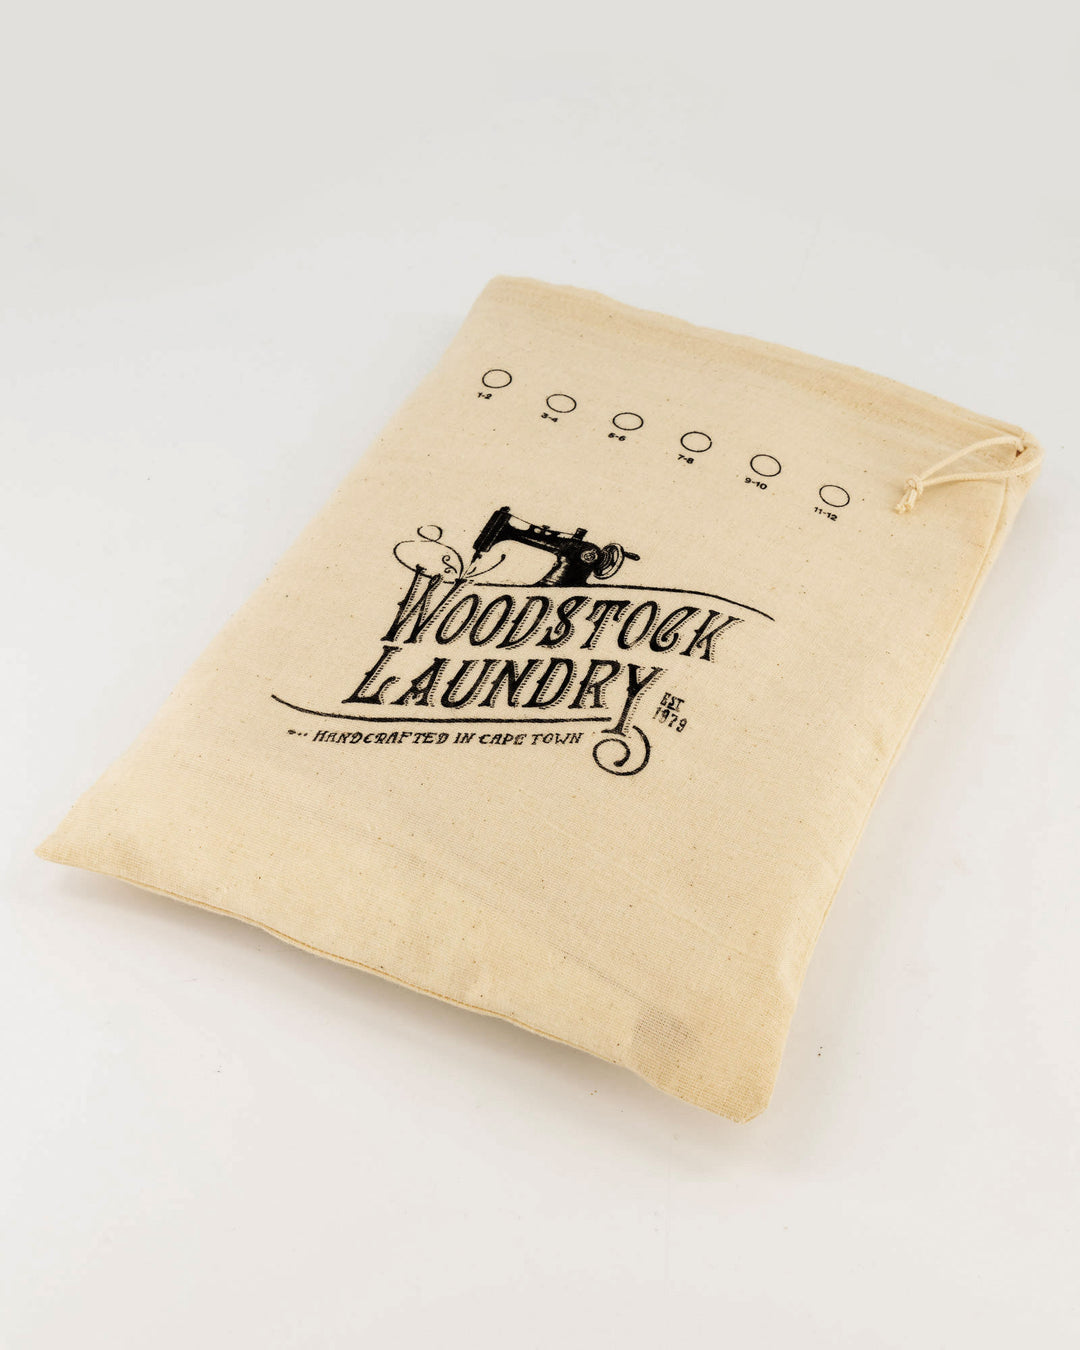 Woodstock Laundry Bag